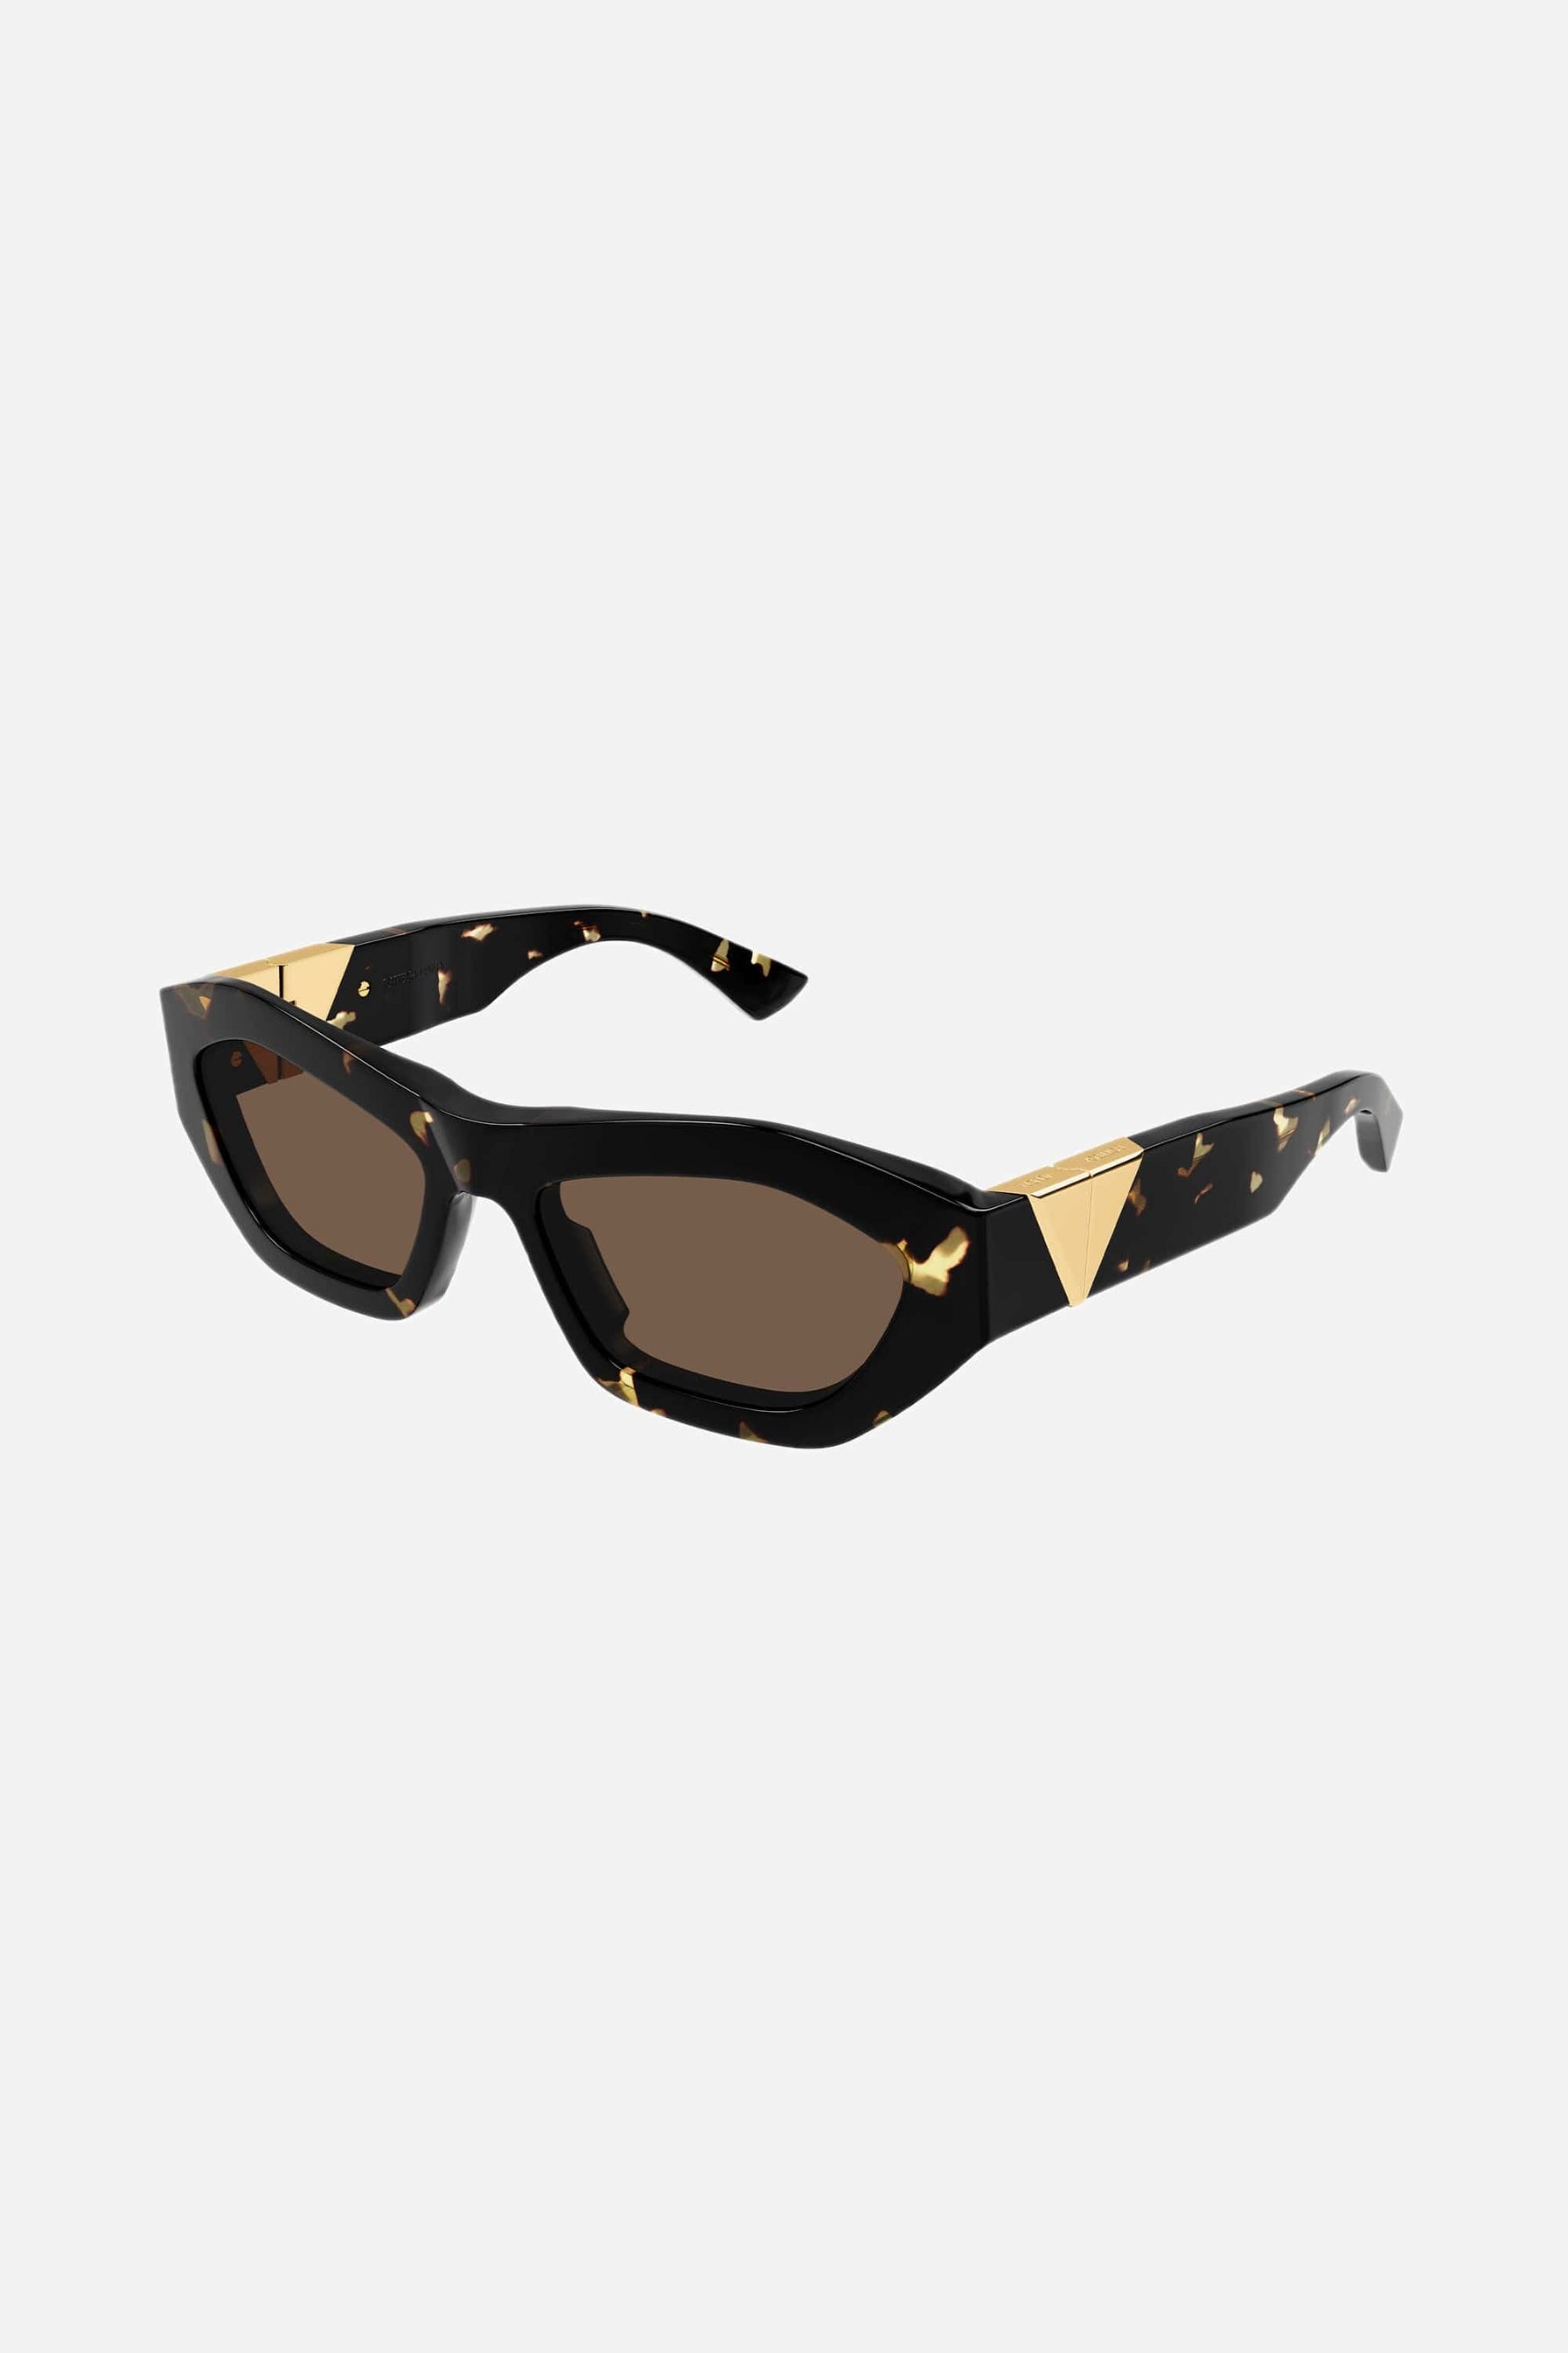 Bottega Veneta geometrical havana sunglasses - Eyewear Club